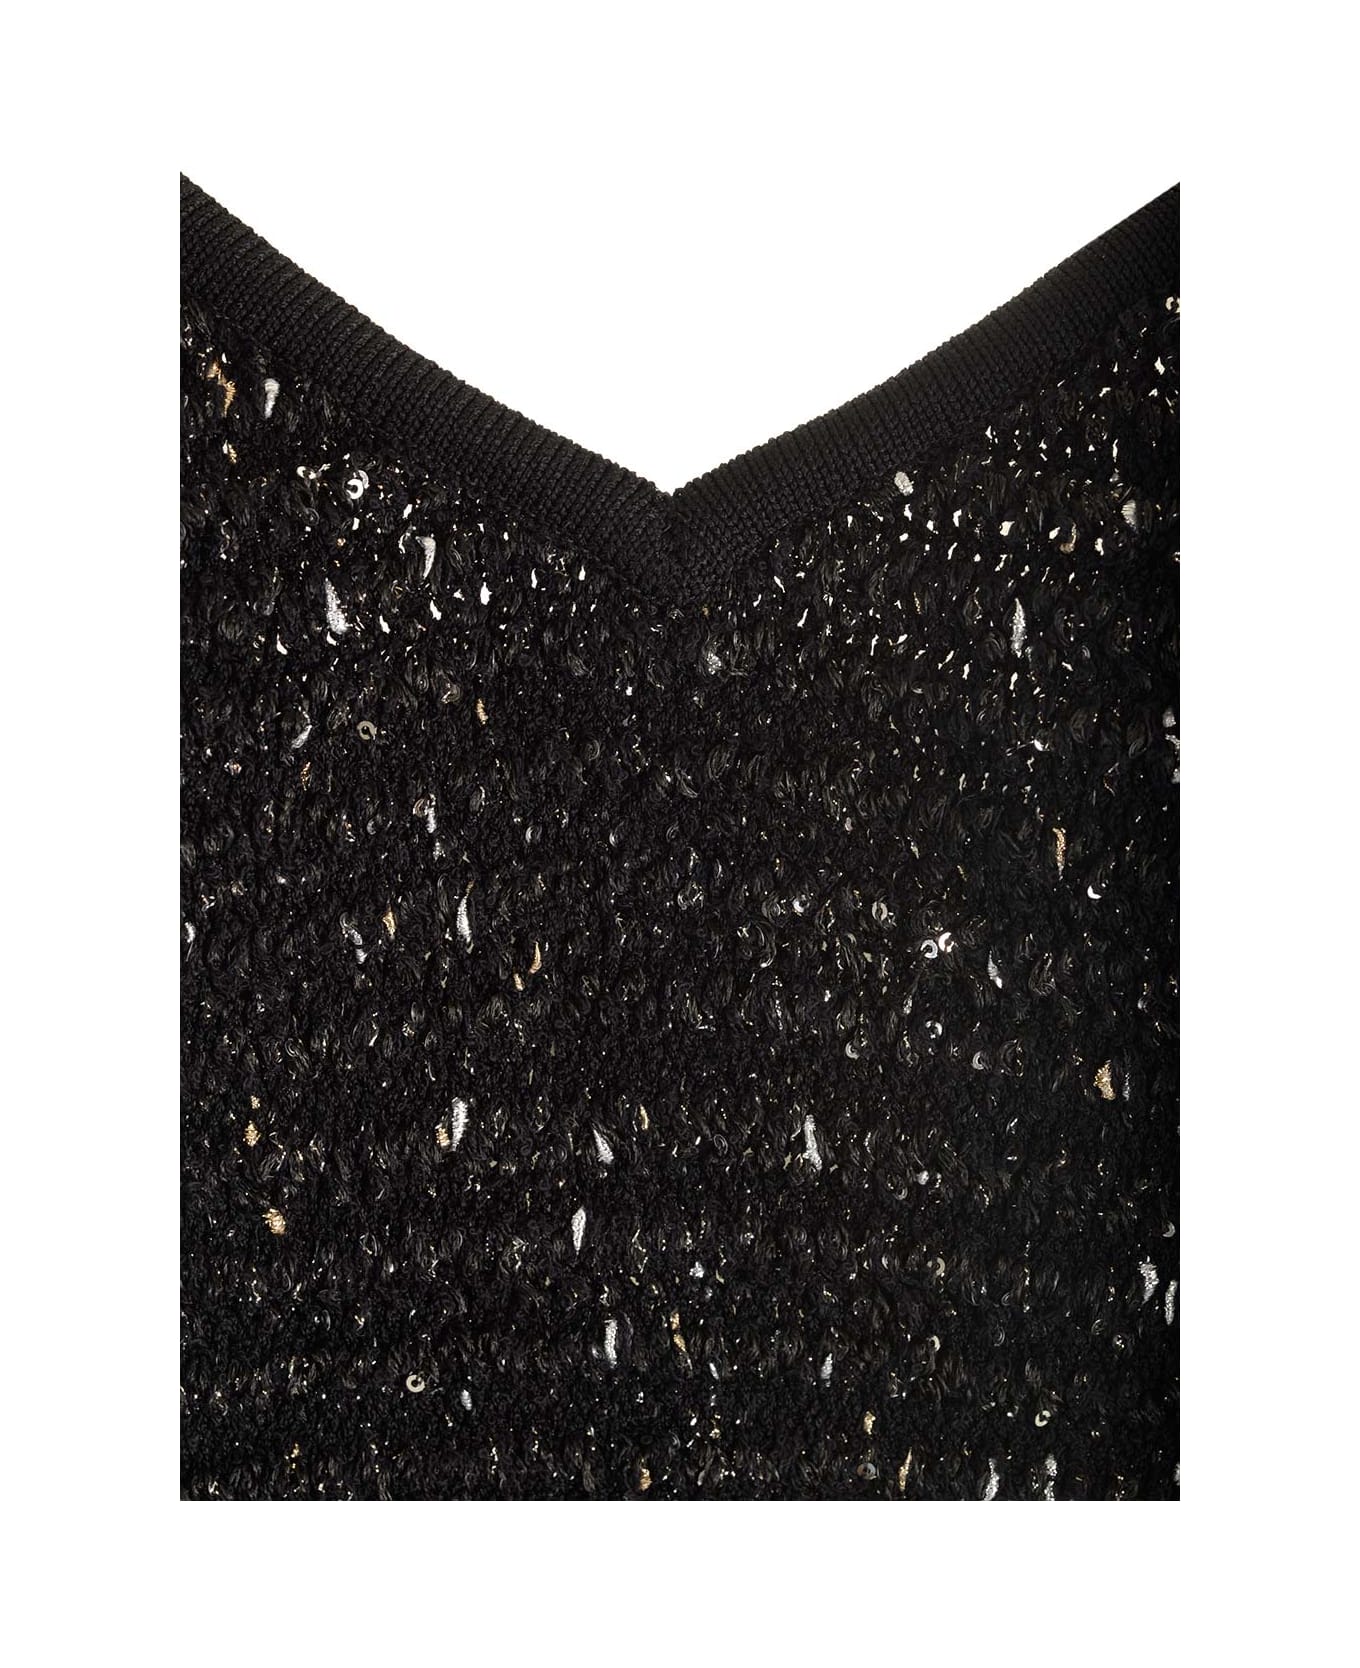 Balmain Fringed Tweed Dress - NERO ORO